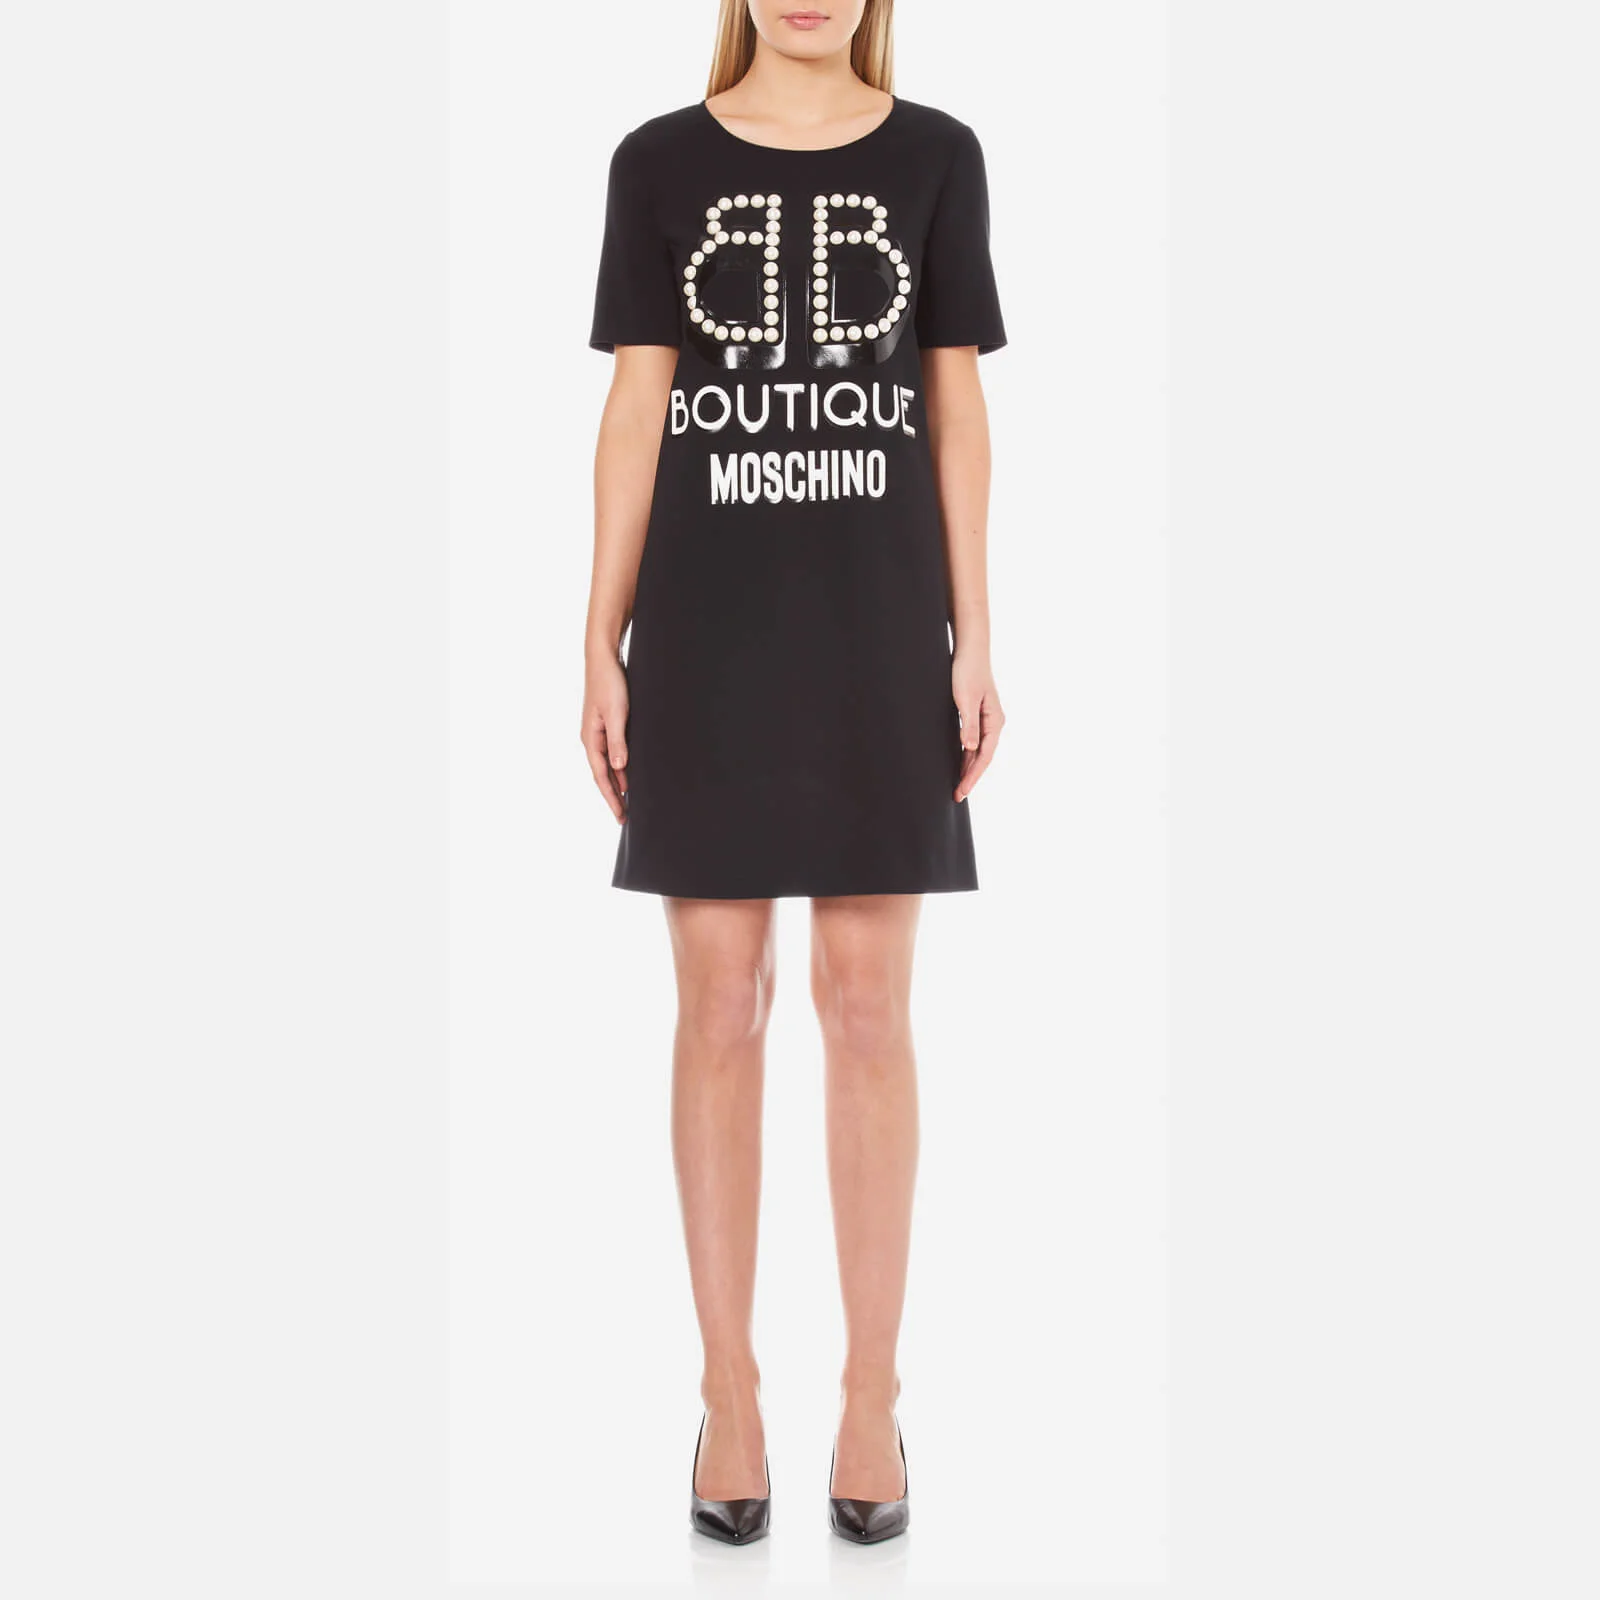 Boutique Moschino Women's Pearl Logo T-Shirt Dress - Black Image 1